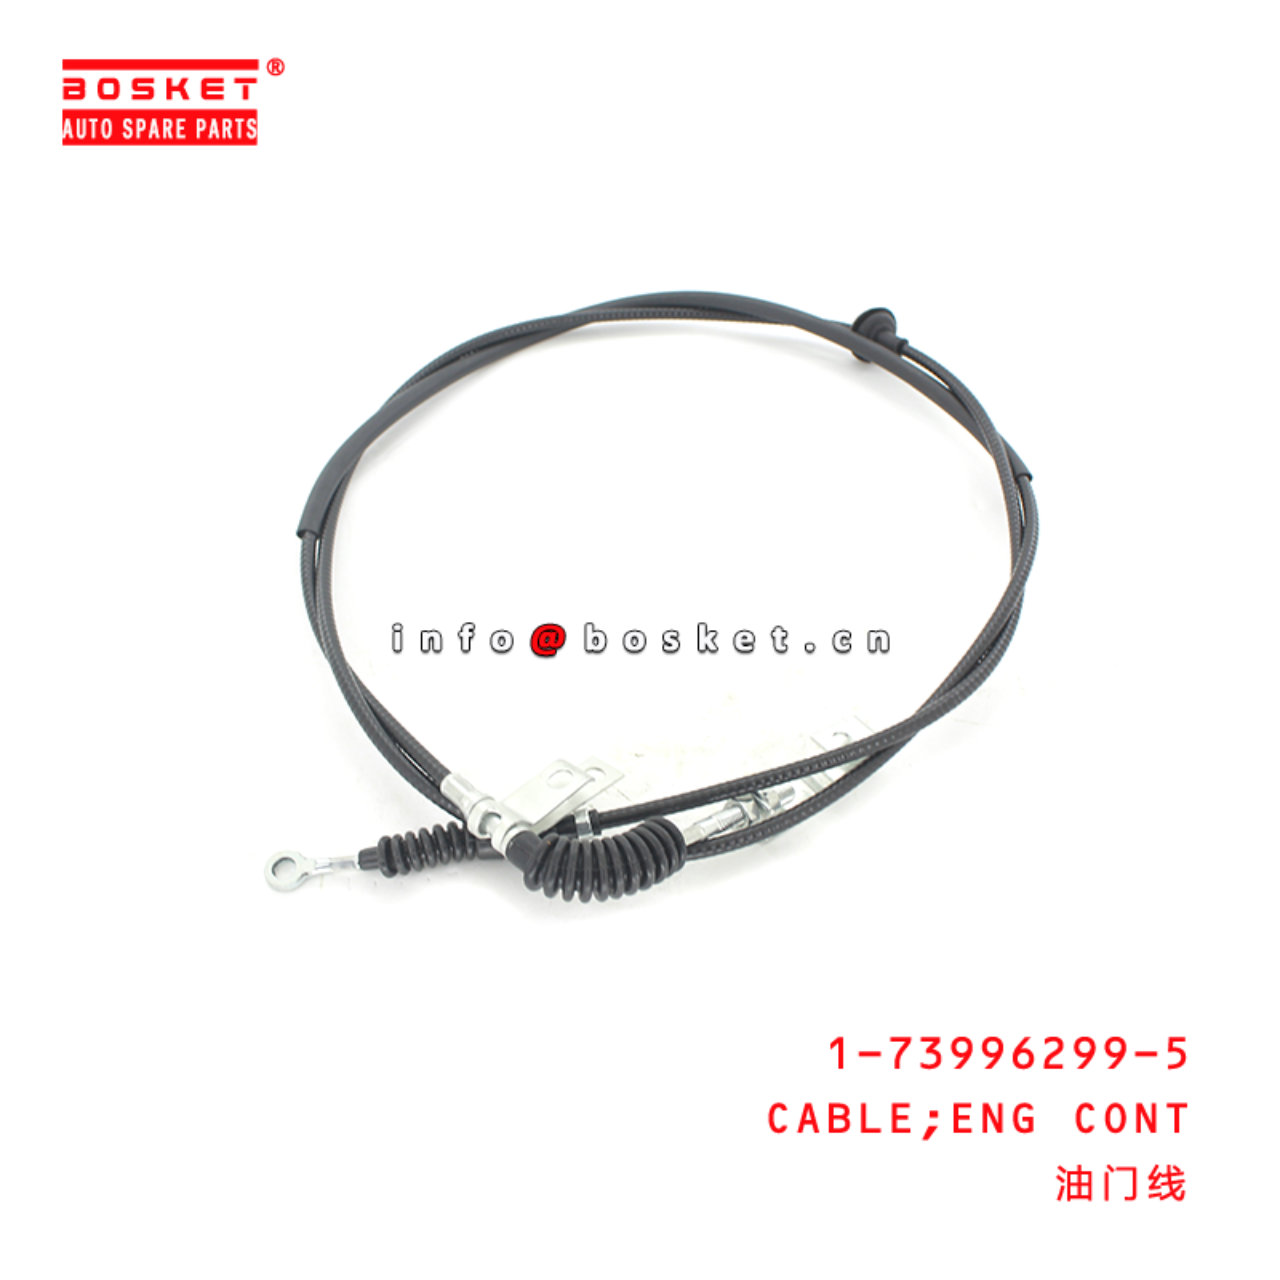 1-73996299-5 Engine Control Cable Suitable for ISUZU FVFXGV 1739962995